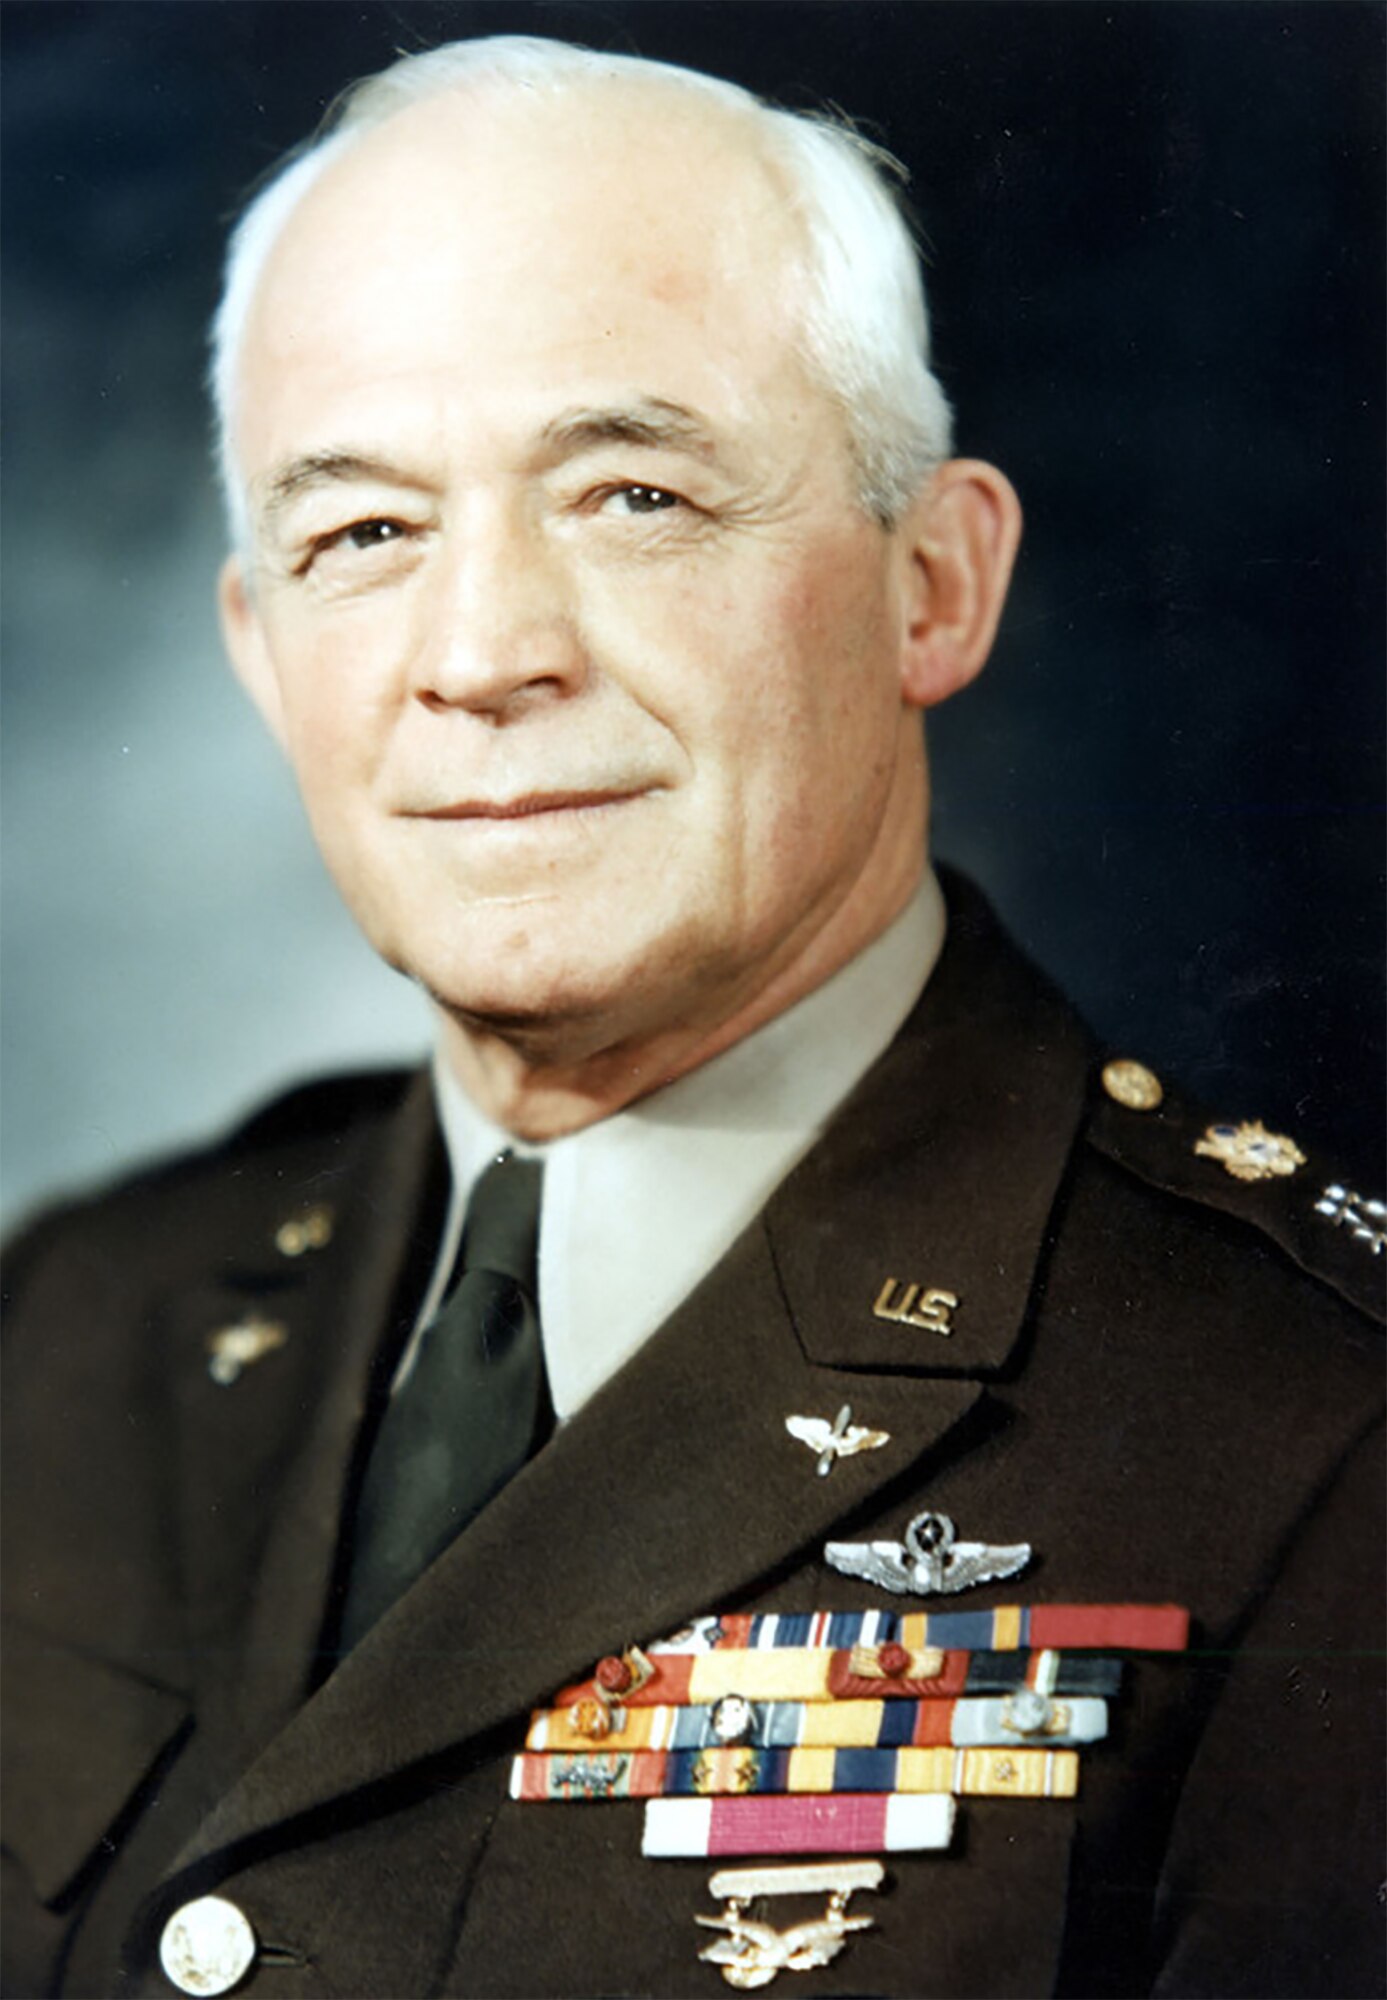 Gen. Henry H. “Hap” Arnold